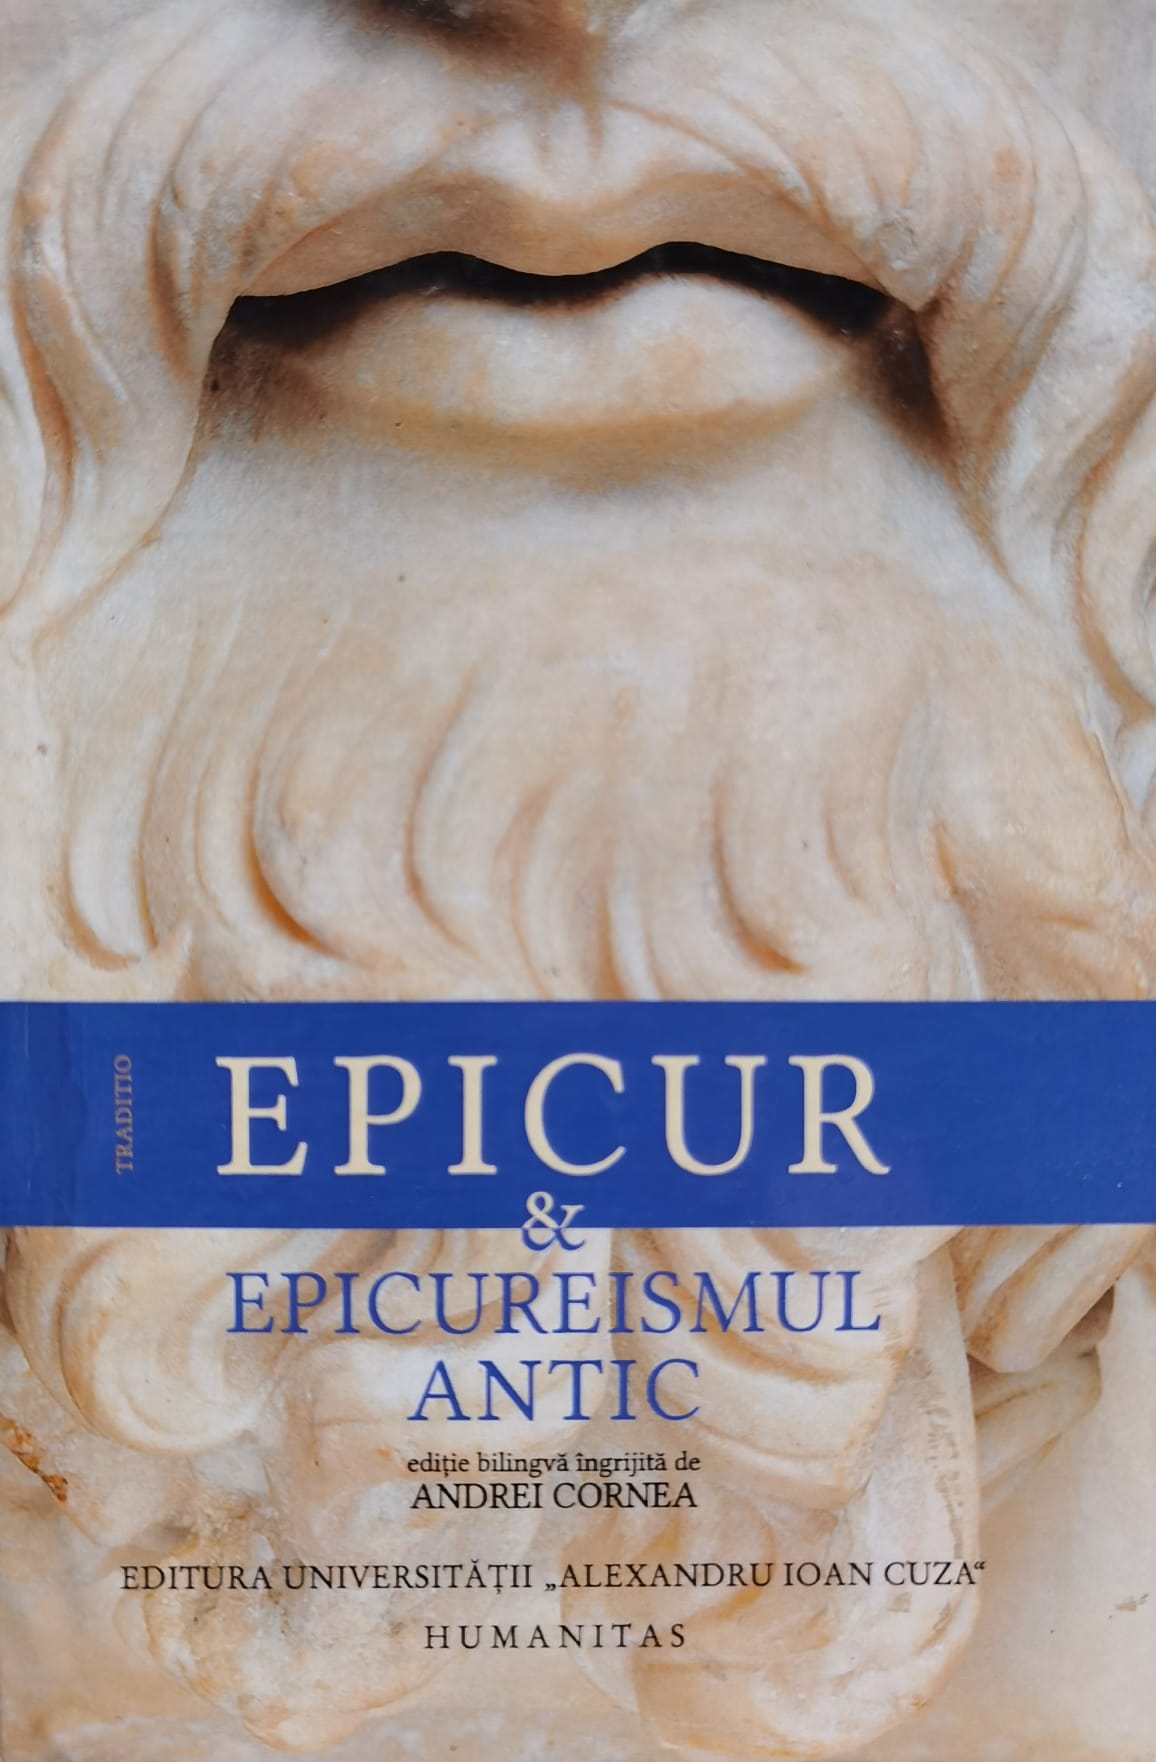 epicur si epicureismul antic (prima editie, editie bilingva)                                         andrei cornea                                                                                       